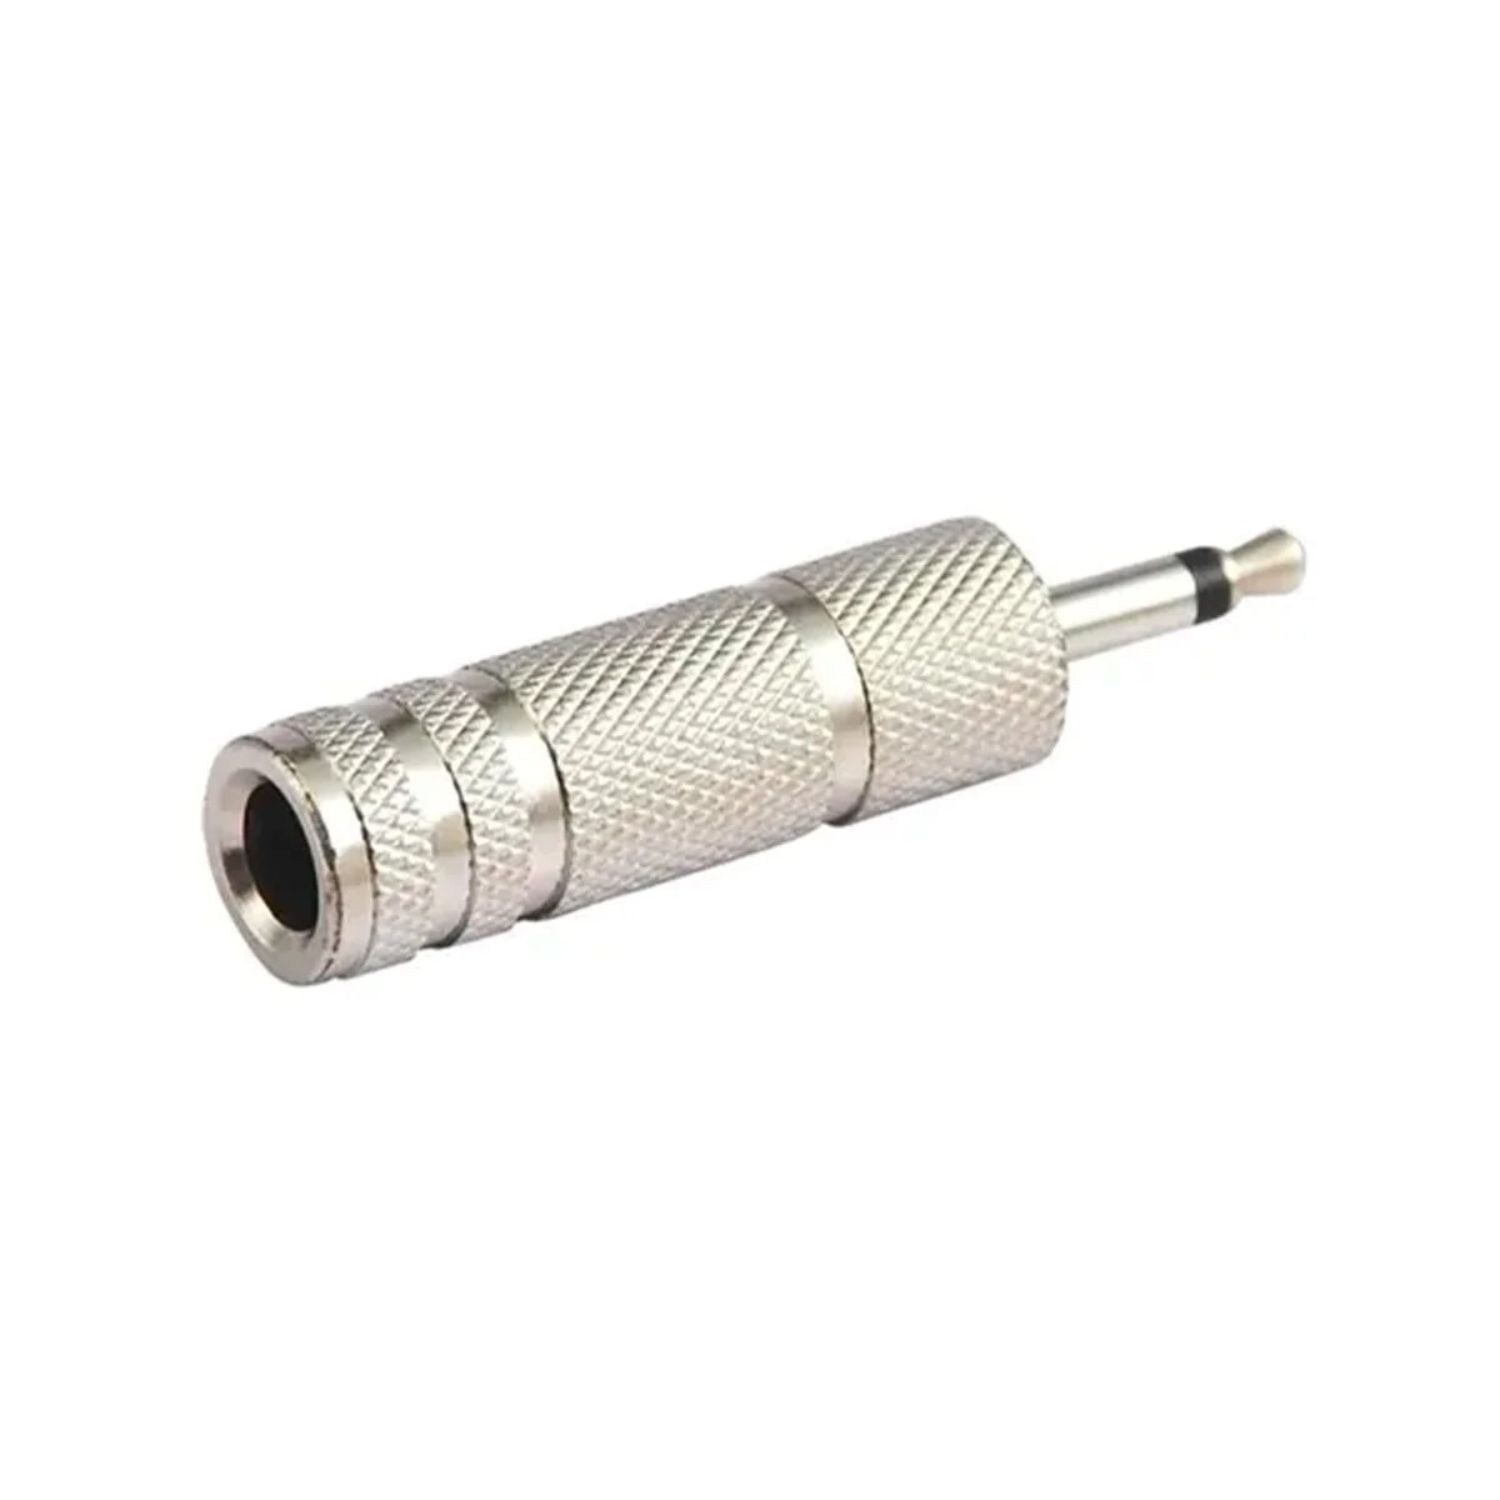 Adaptador 2 Jack Rca a Plug Stereo 6.3mm Rpan330 Roxtone - Promart